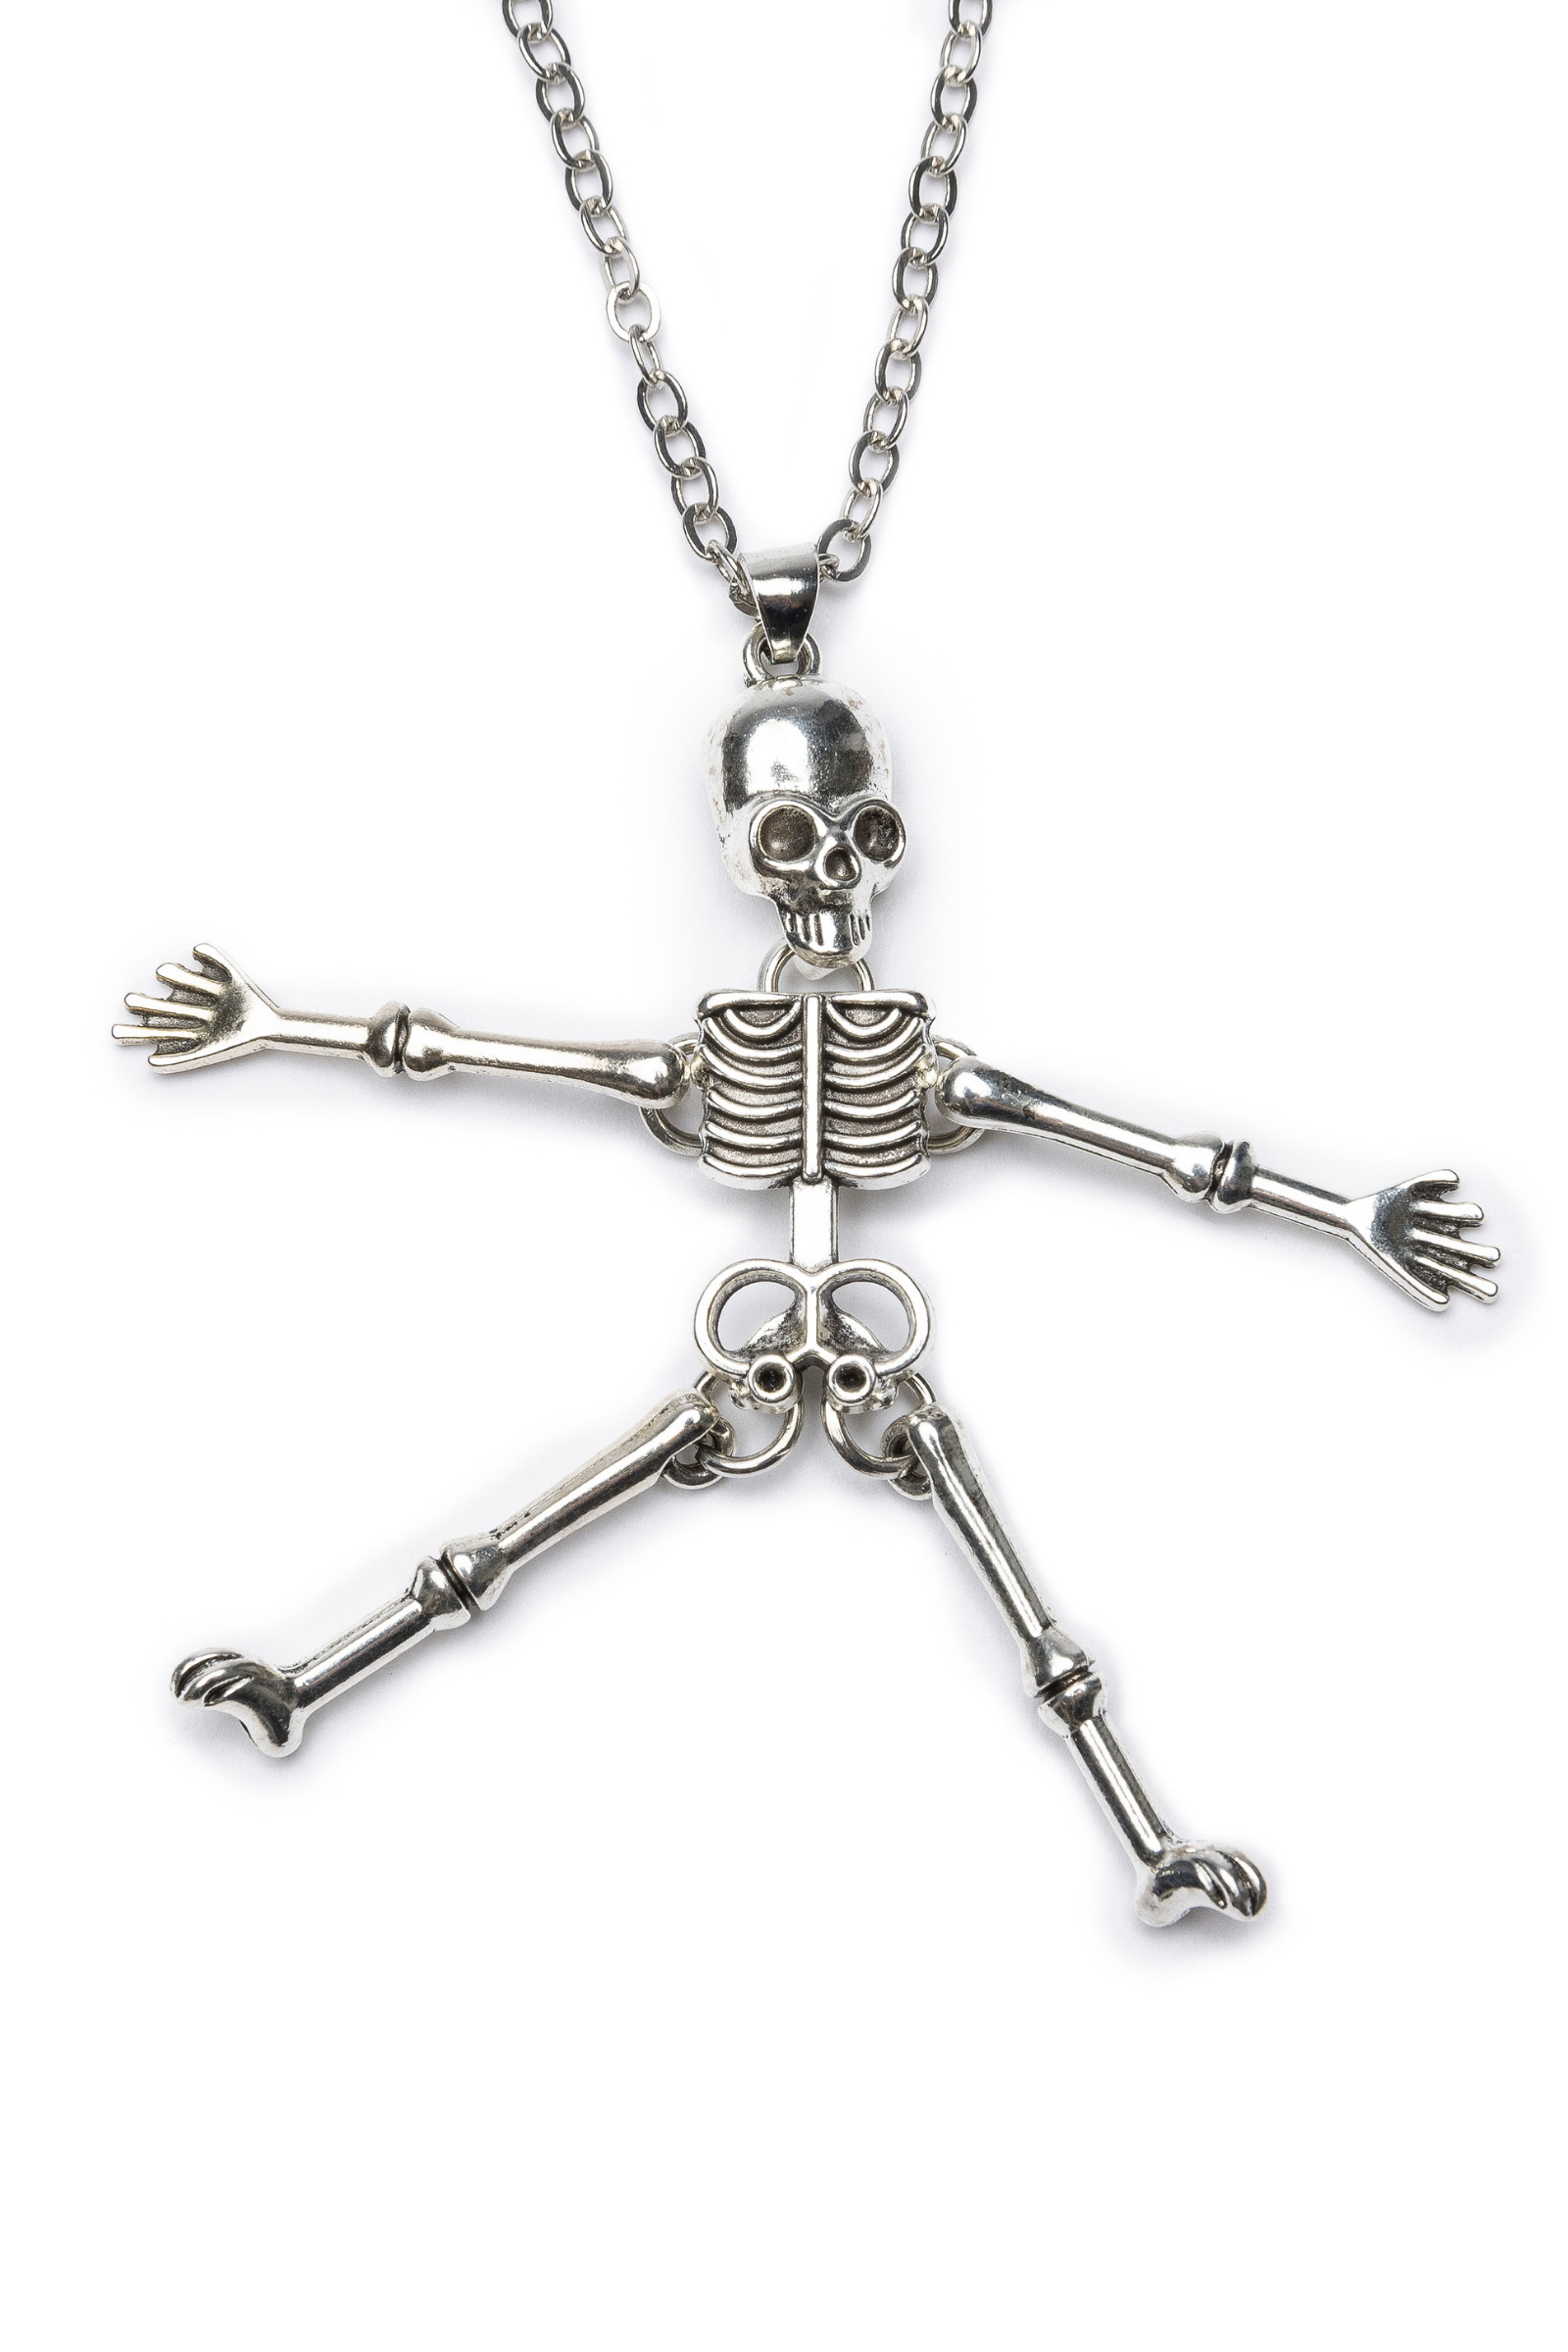 Spooky Scary Skeleton Necklace